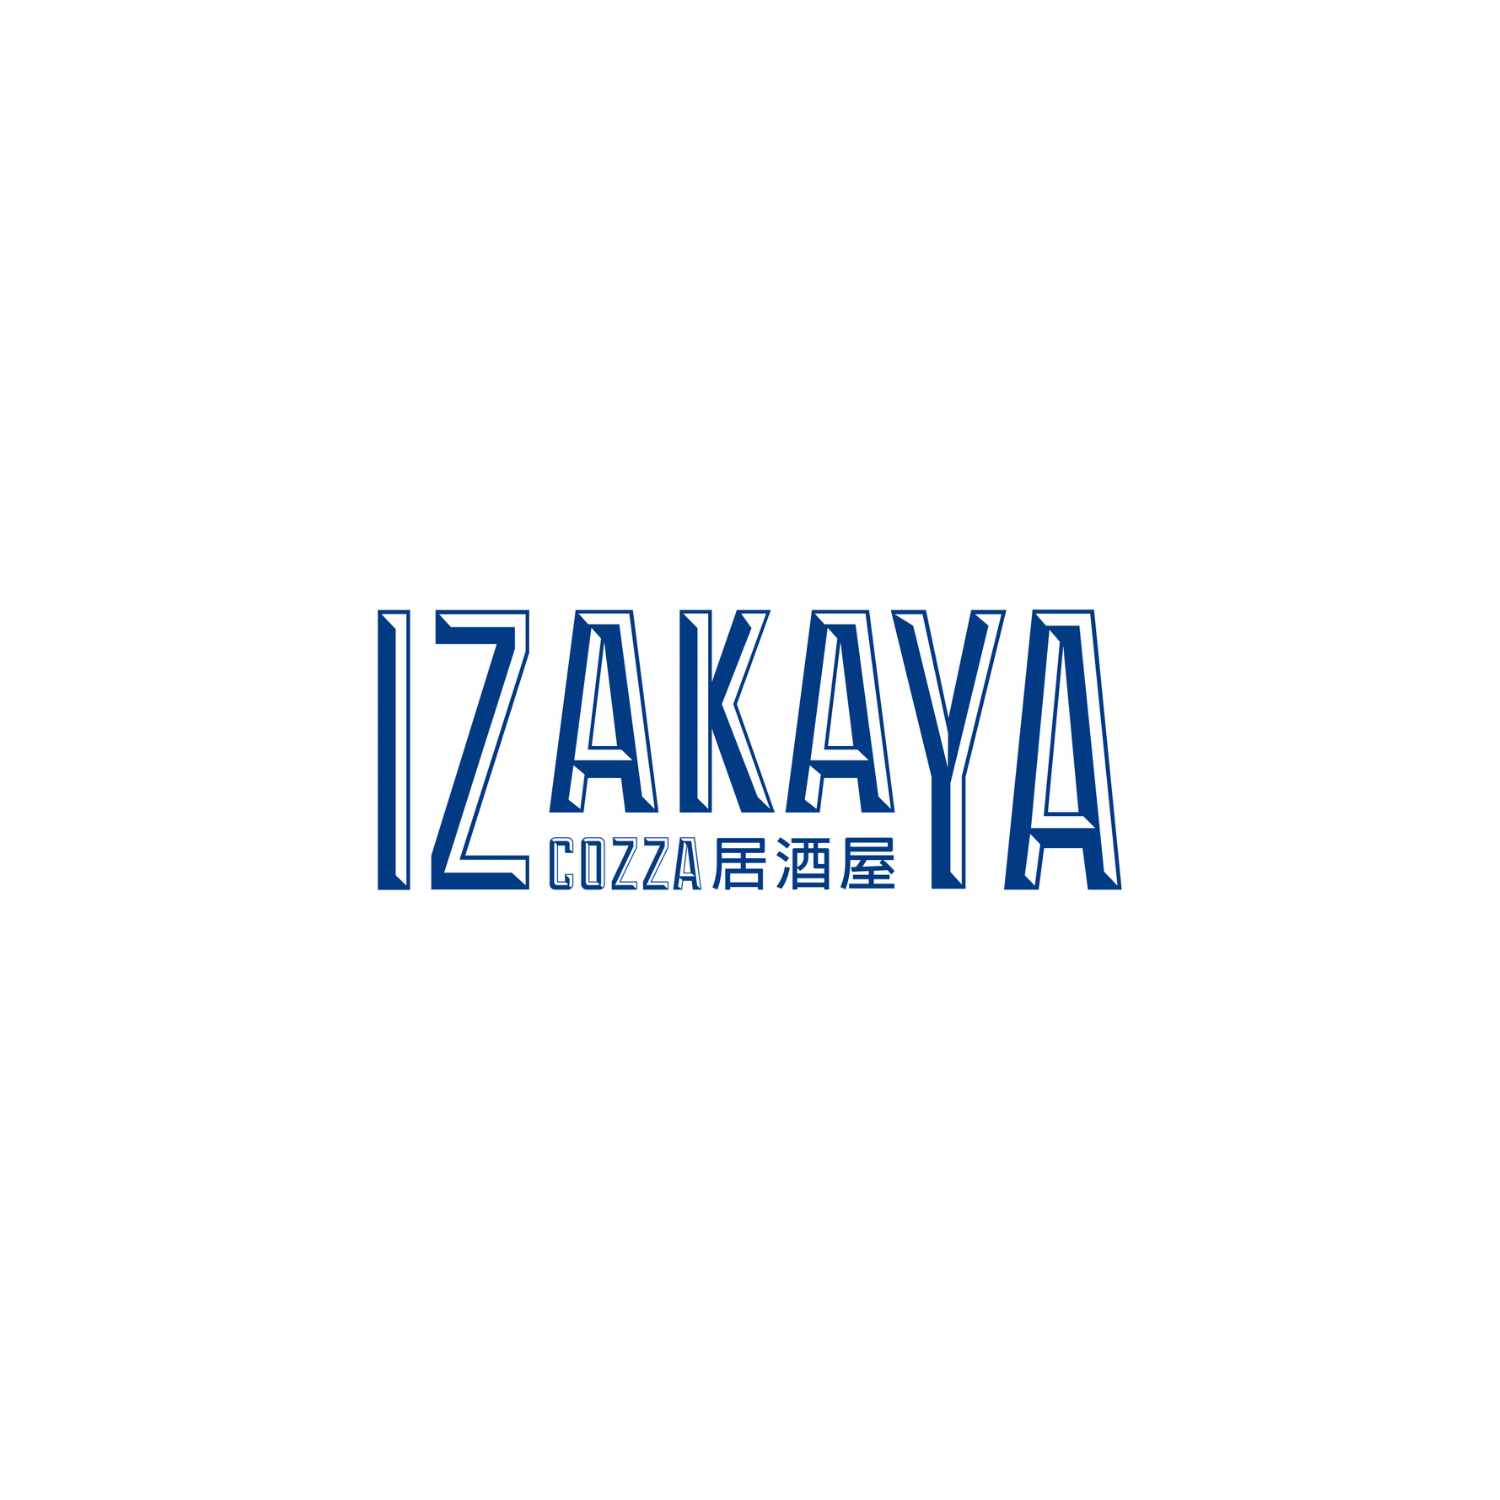 izakaya-cozza-monaco-carlo-app-merchant-restaurant